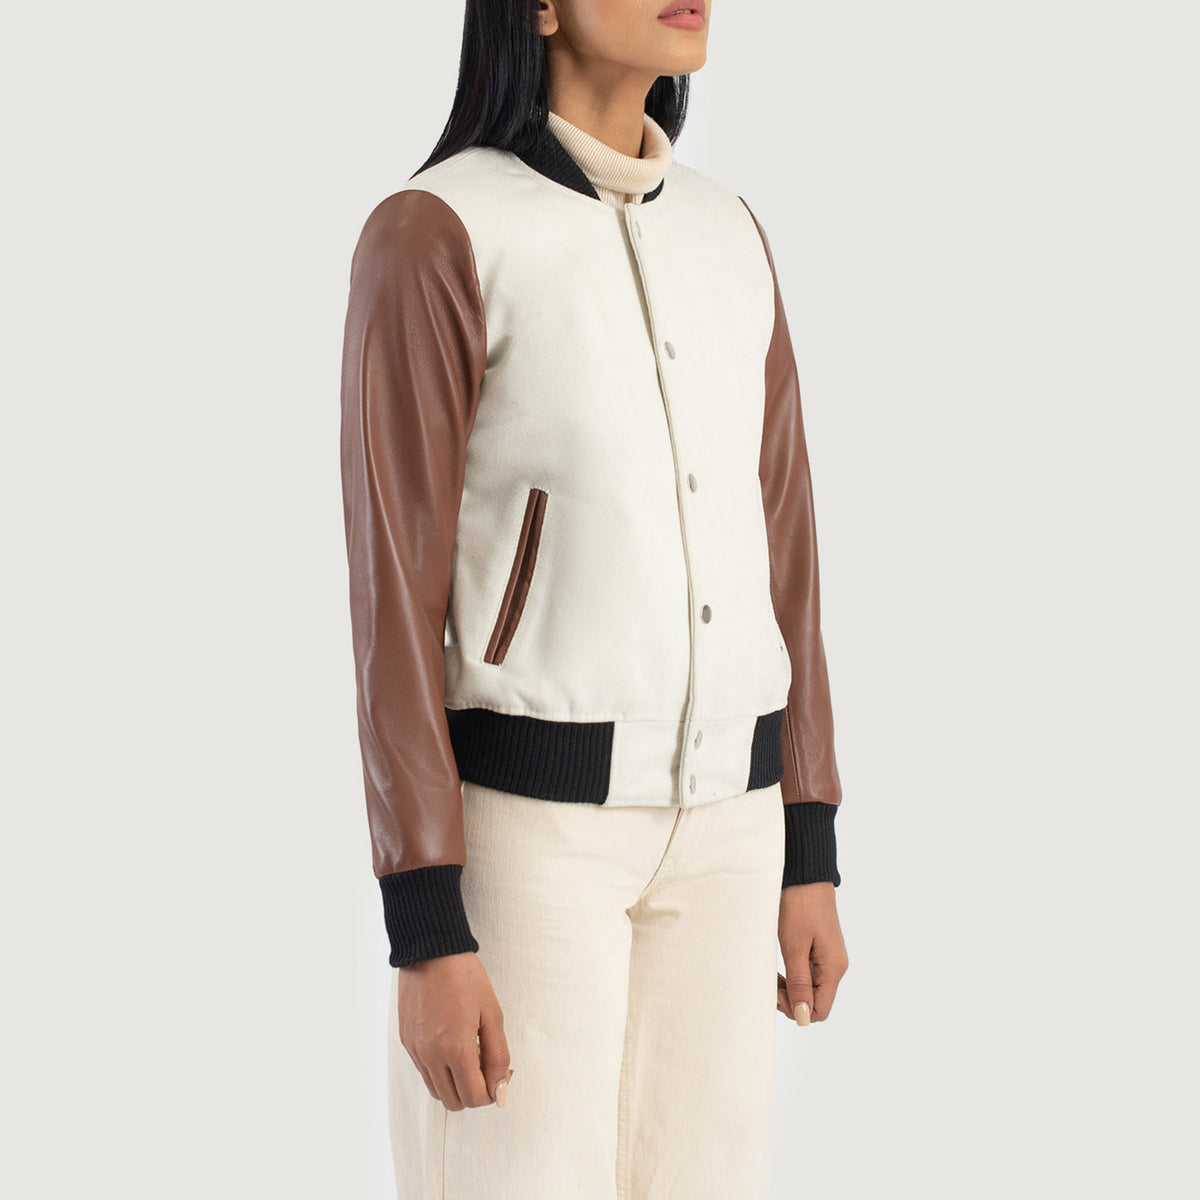 Savant White & Brown Hybrid Varsity Jacket